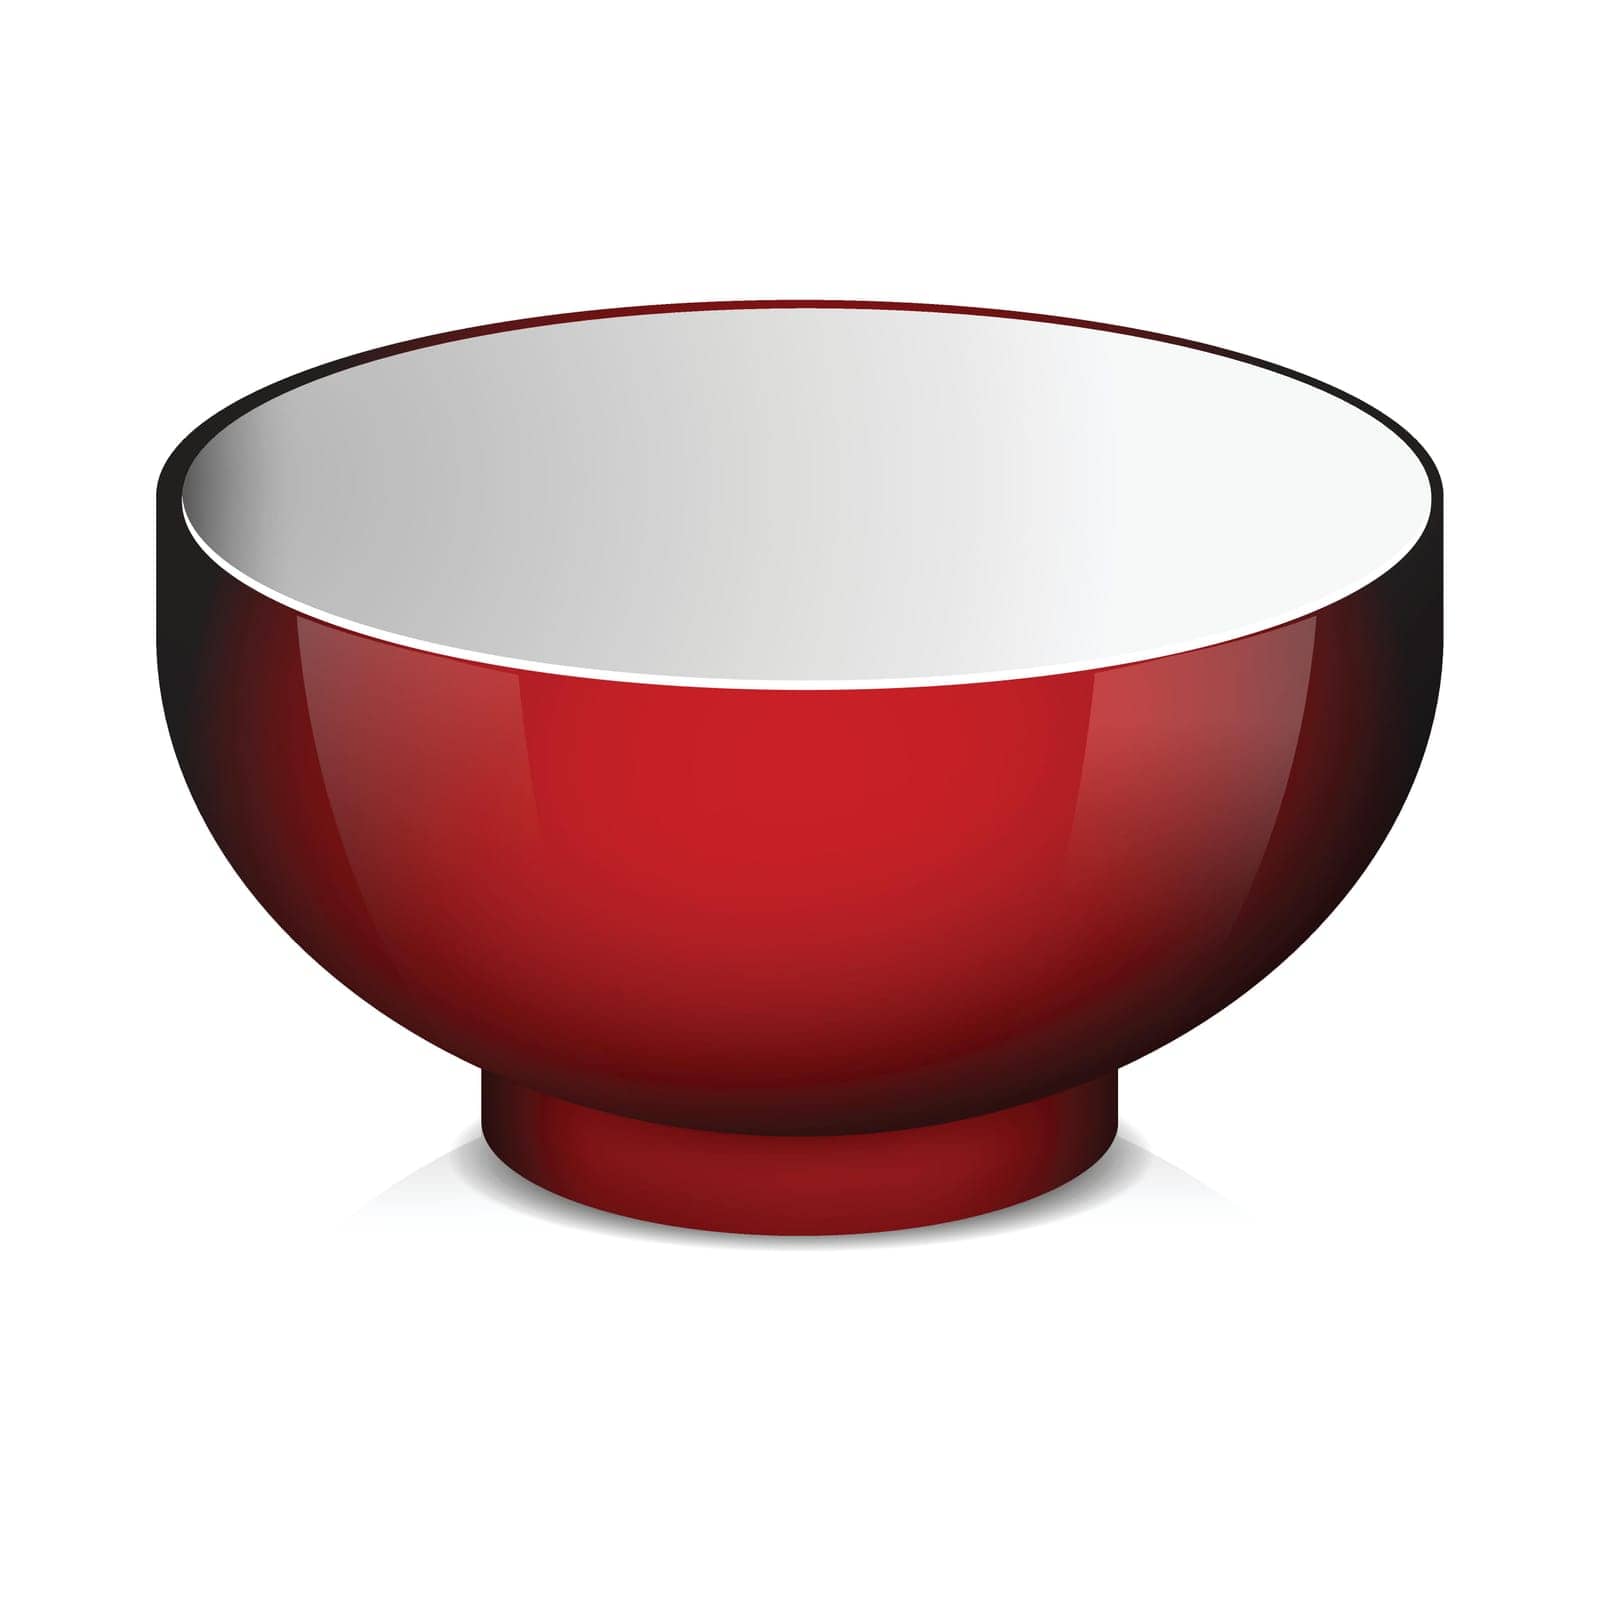 Porcelain bowl isolated illustration vector